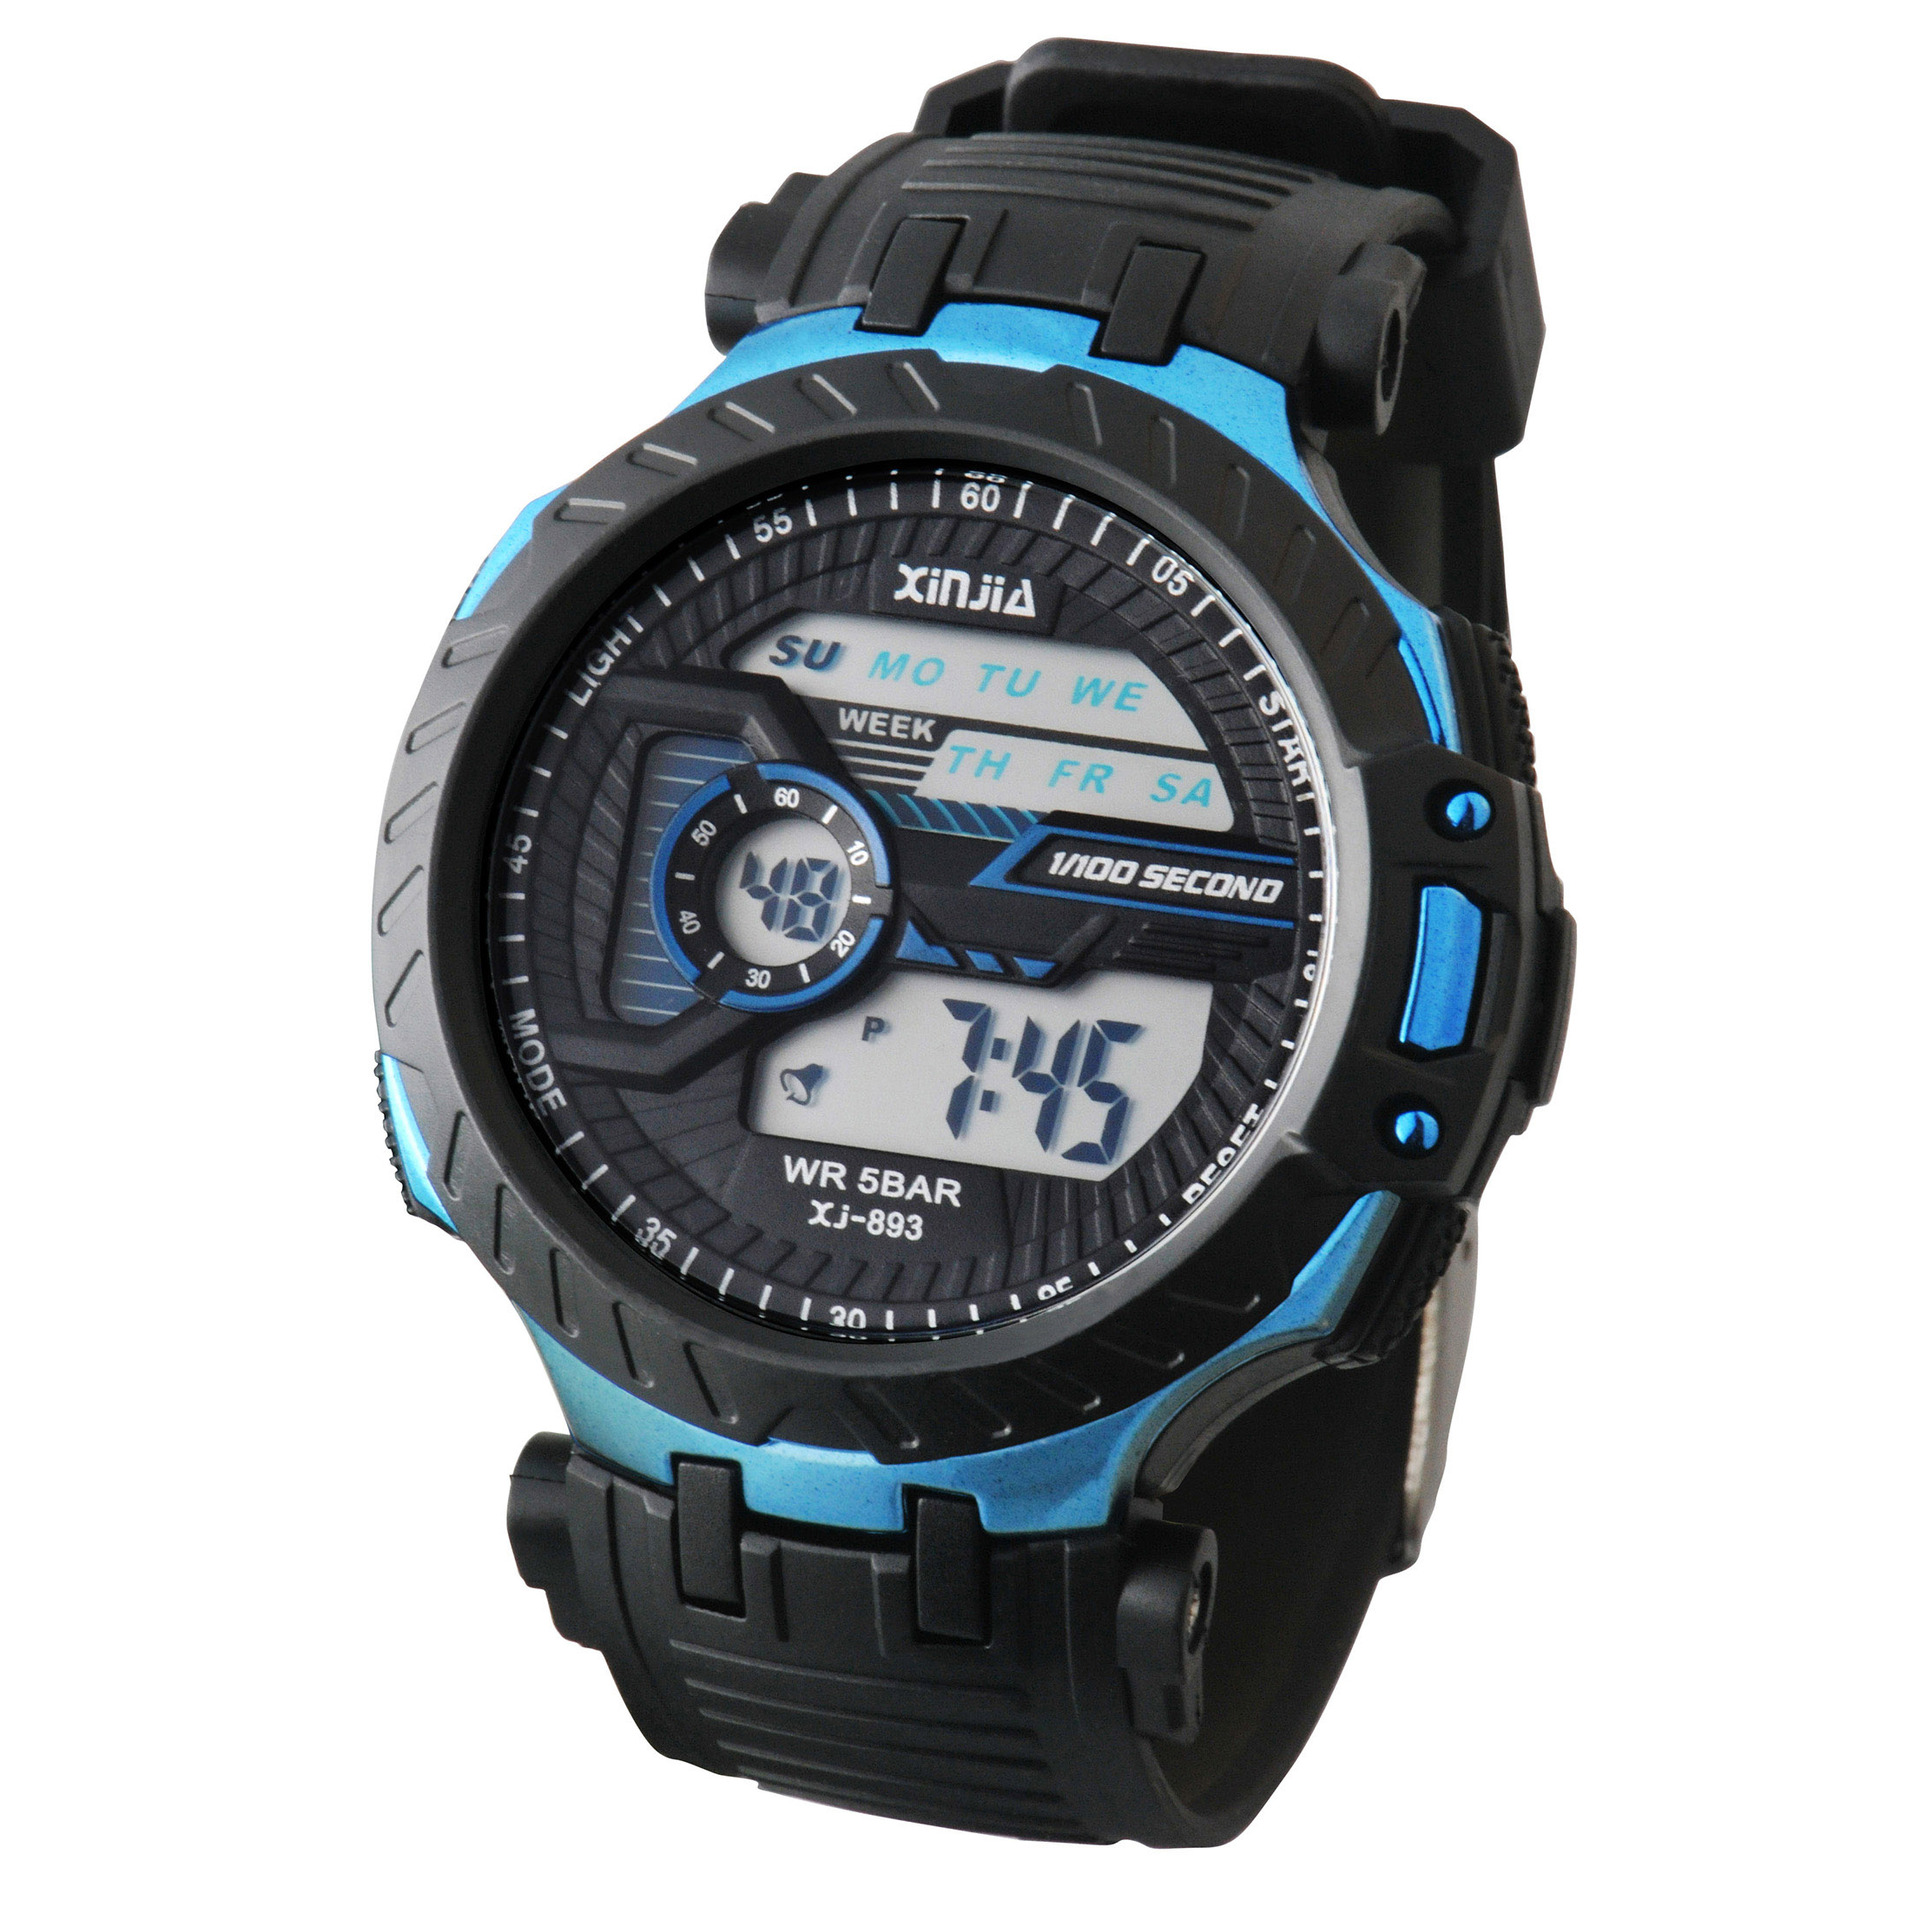 Xinjia Student Watch Luminous Fashion Clock Waterproof Plastic Electronic Meter Sports Watch Can Be Customized